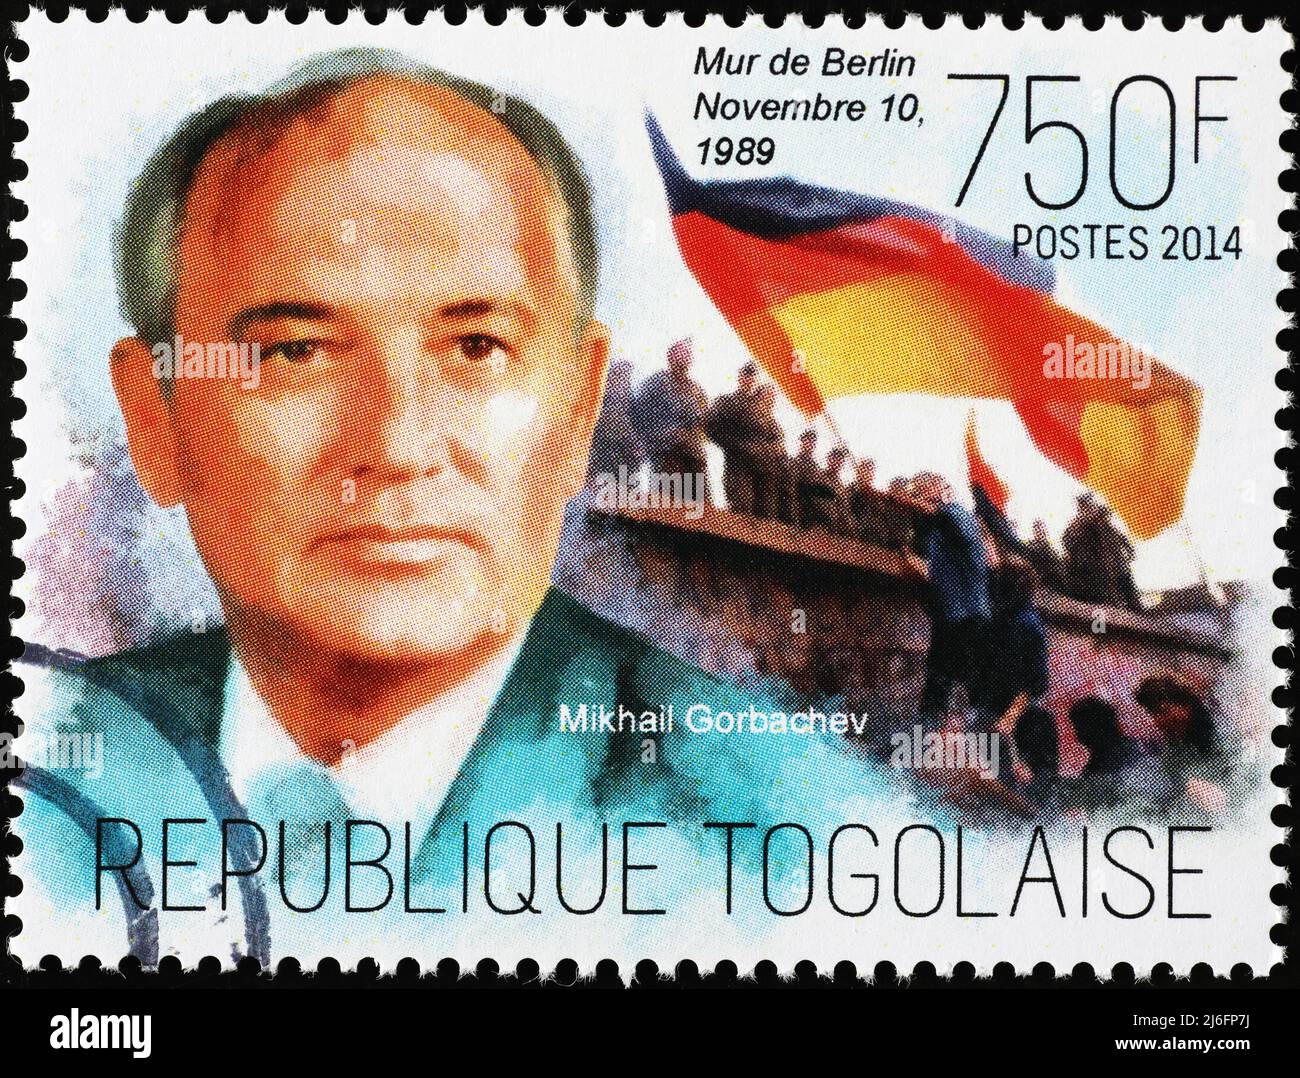 Mikhail Gorbachev y el muro de Berlín en sello postal Foto de stock